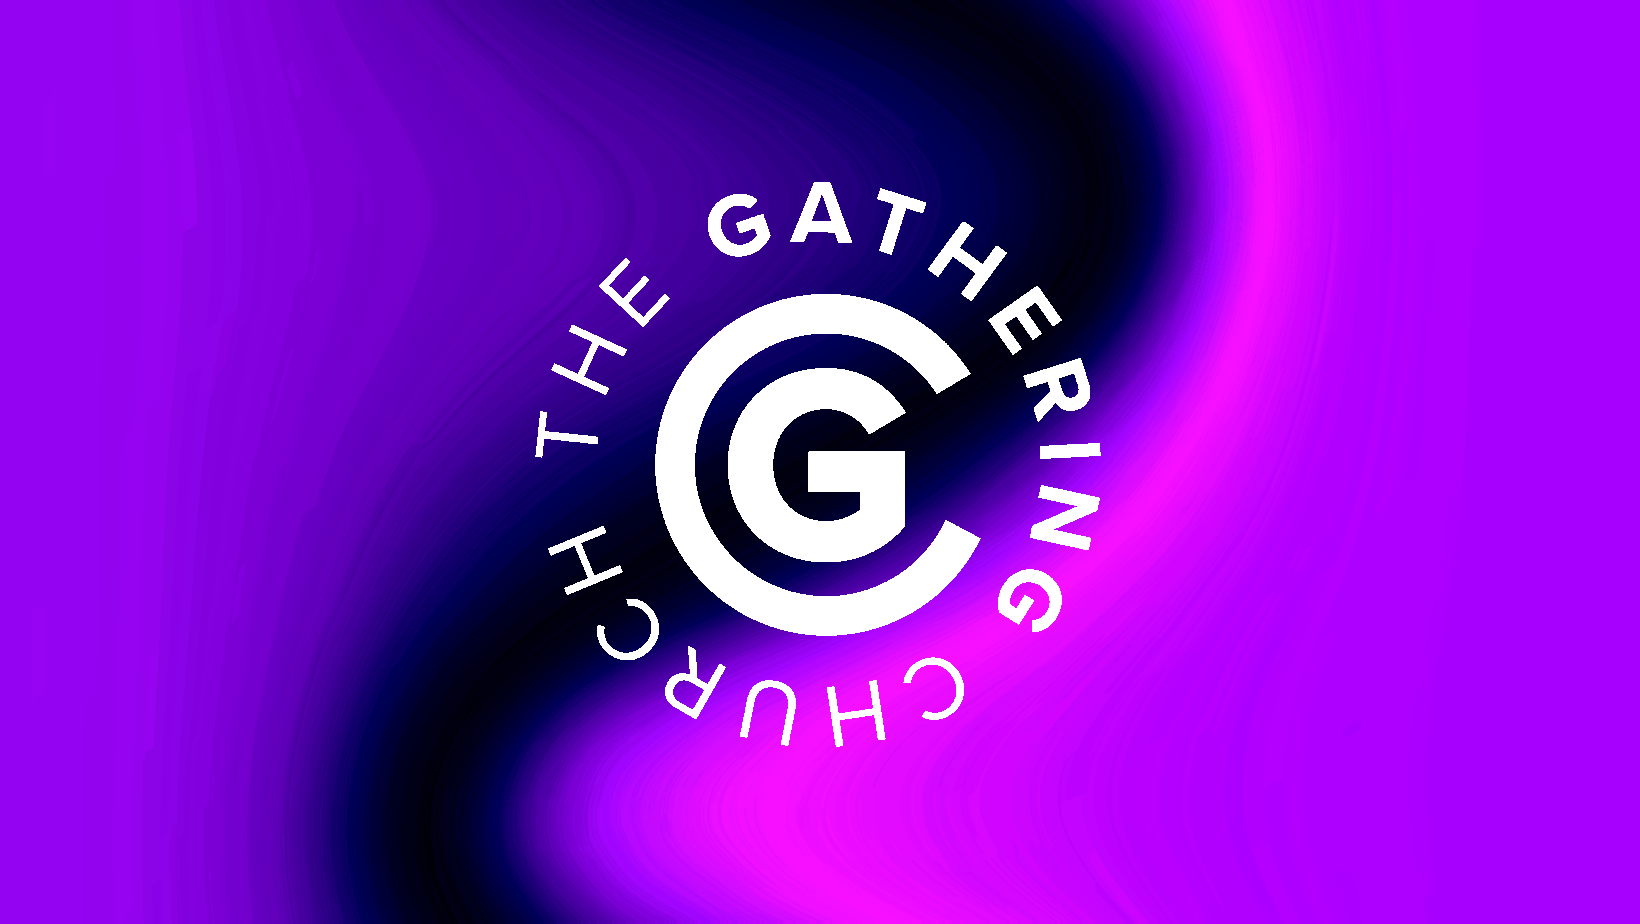 The Gathering Church Logo on a purple/magenta background